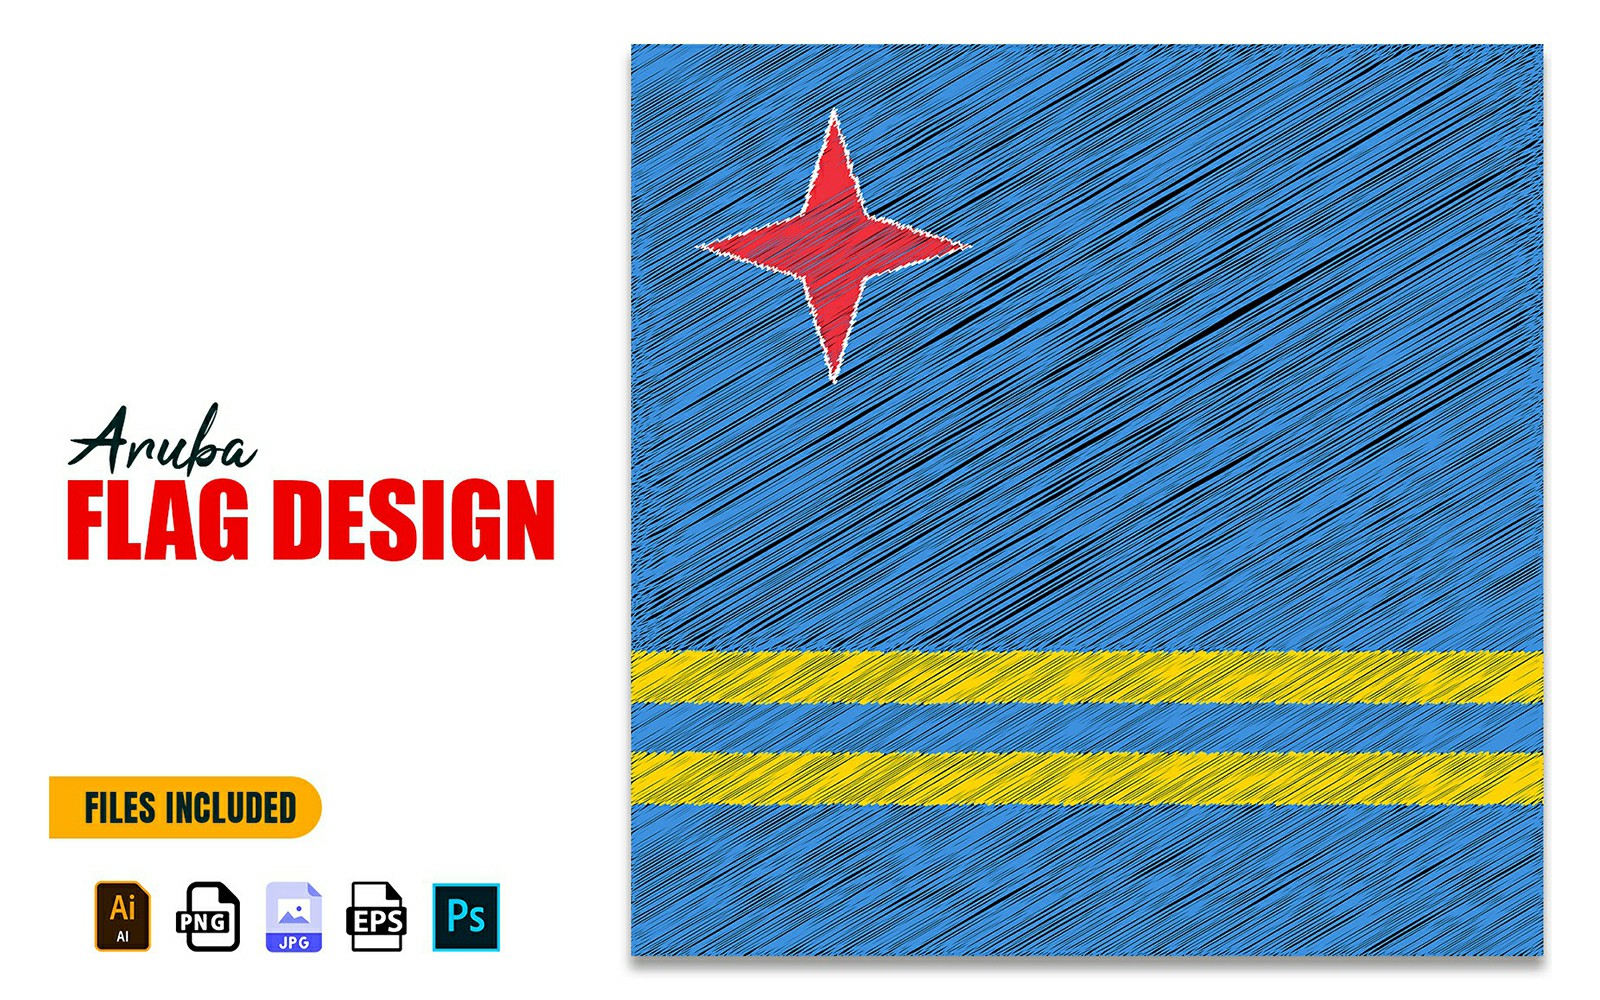 18 March Aruba Independence Day Flag Design Illustration